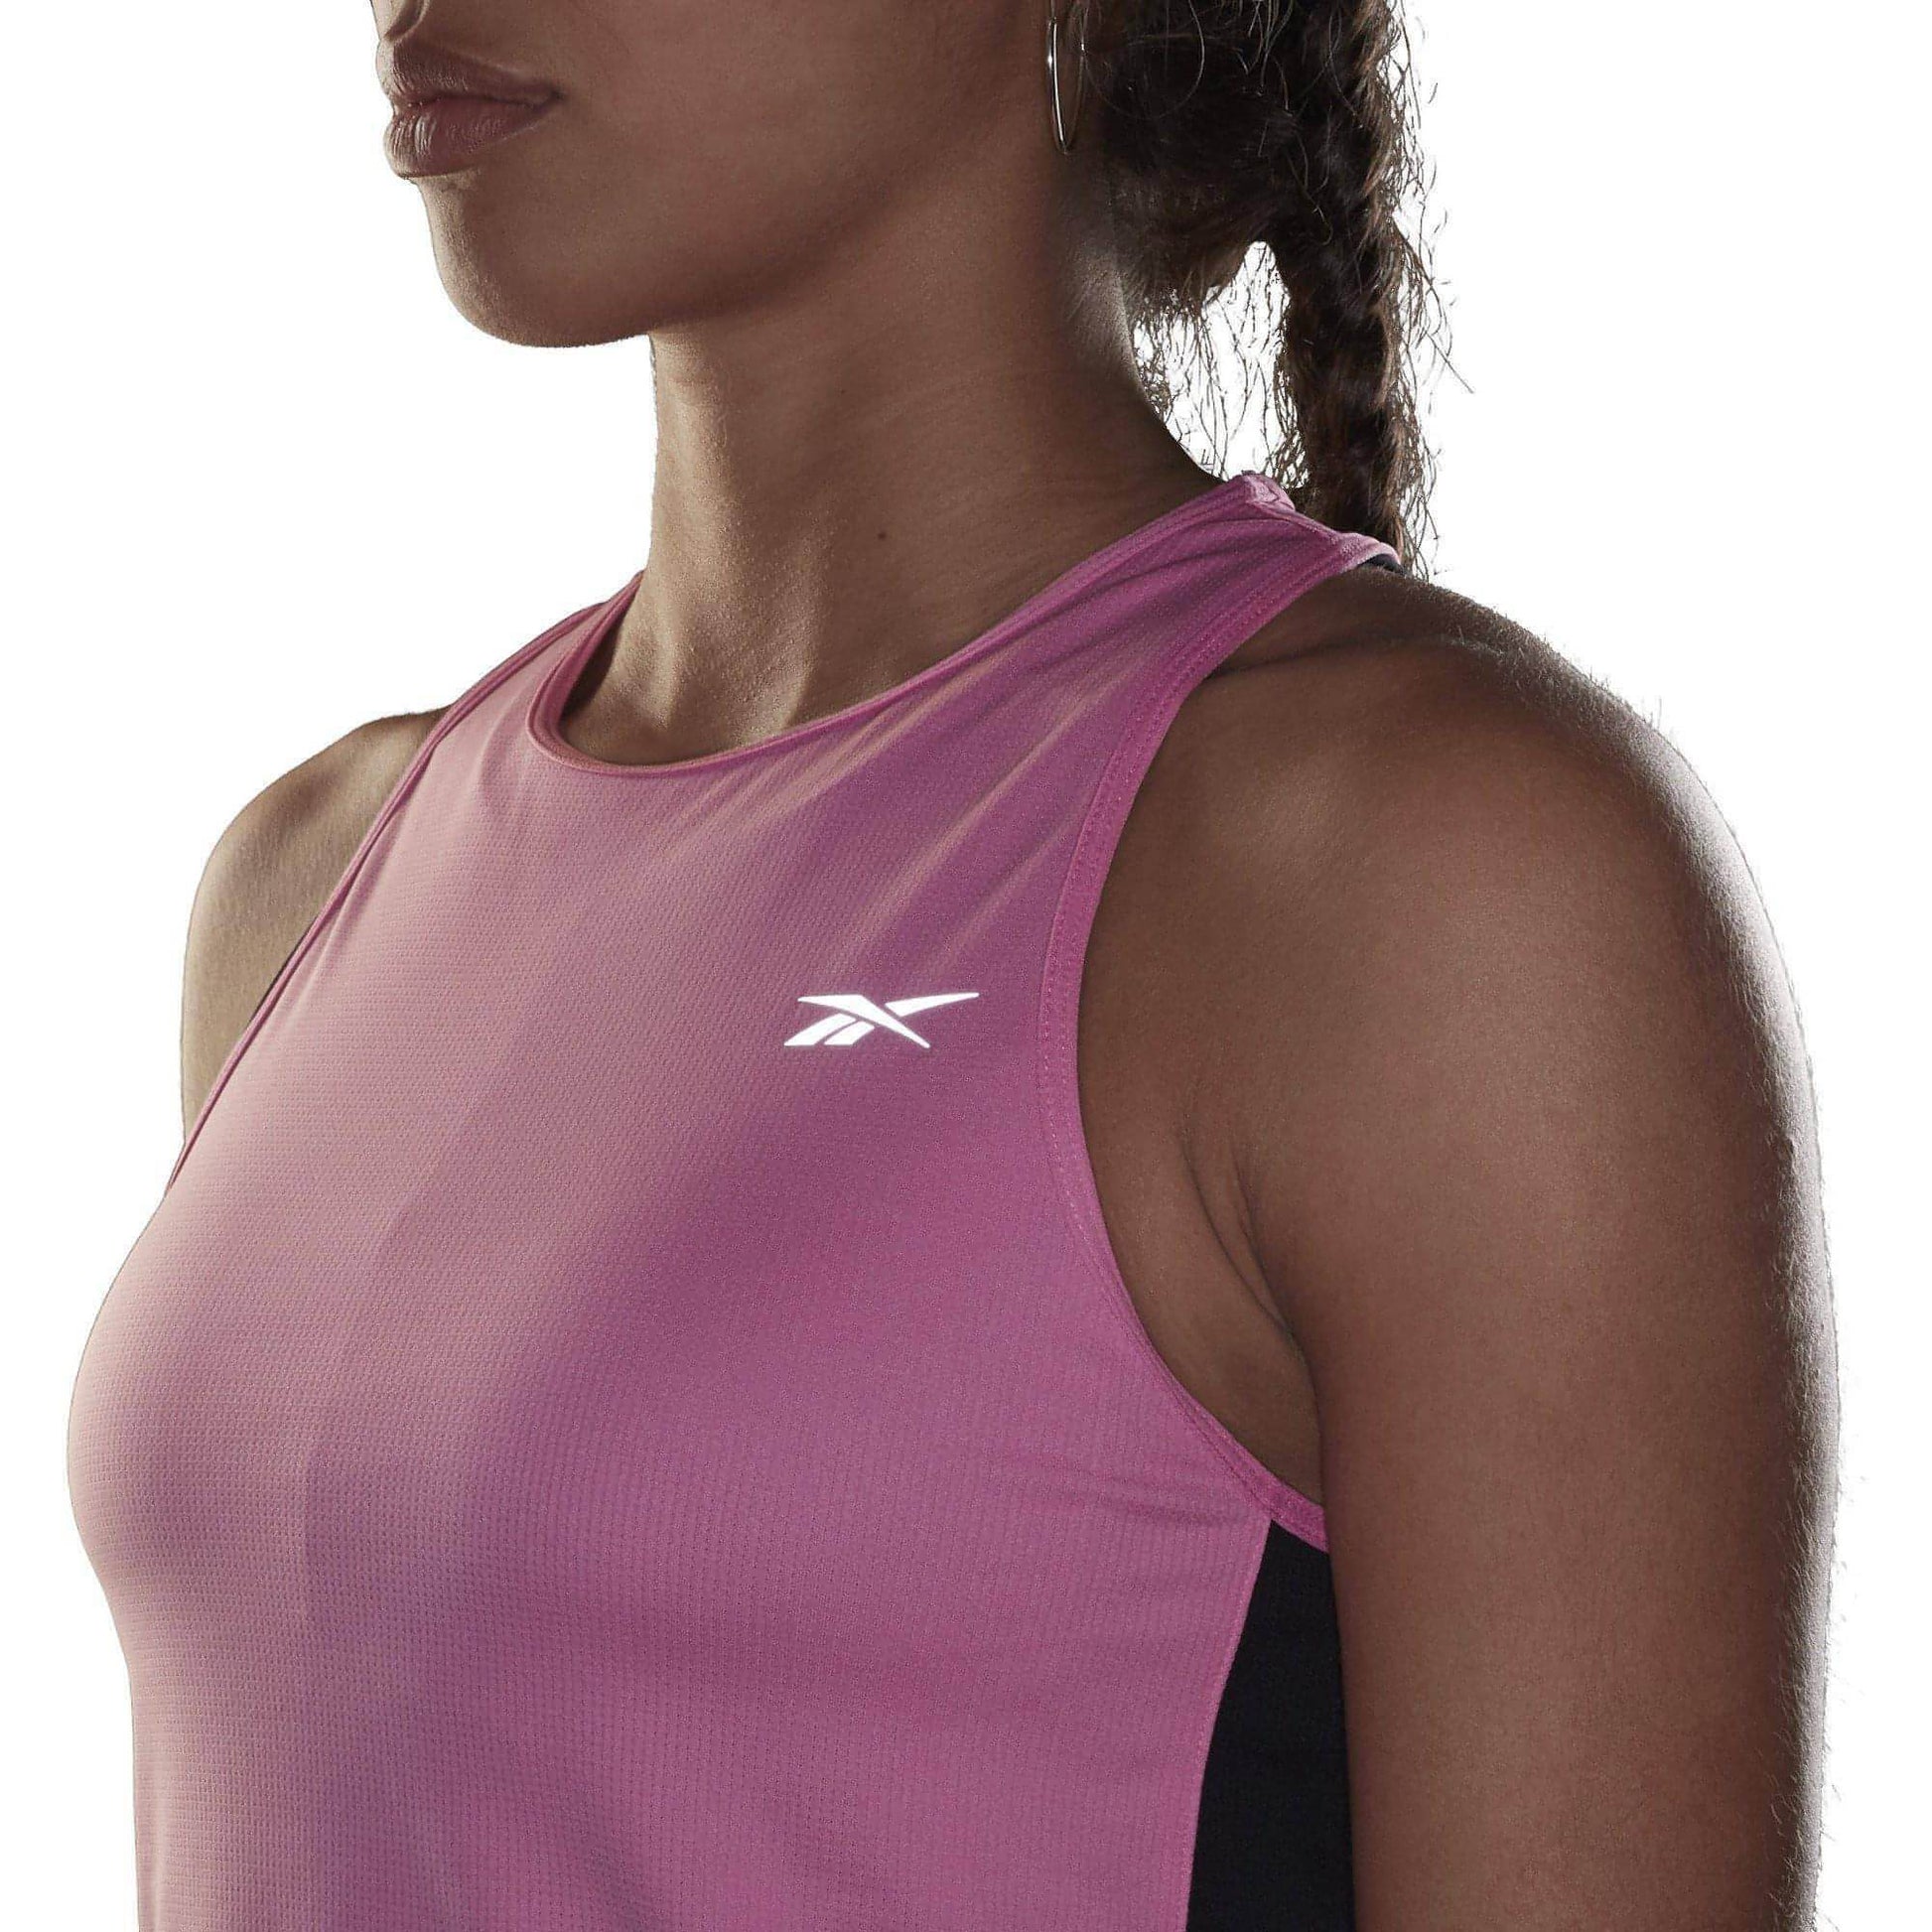 Reebok Essentials Womens Running Vest Tank Top - Pink - Start Fitness